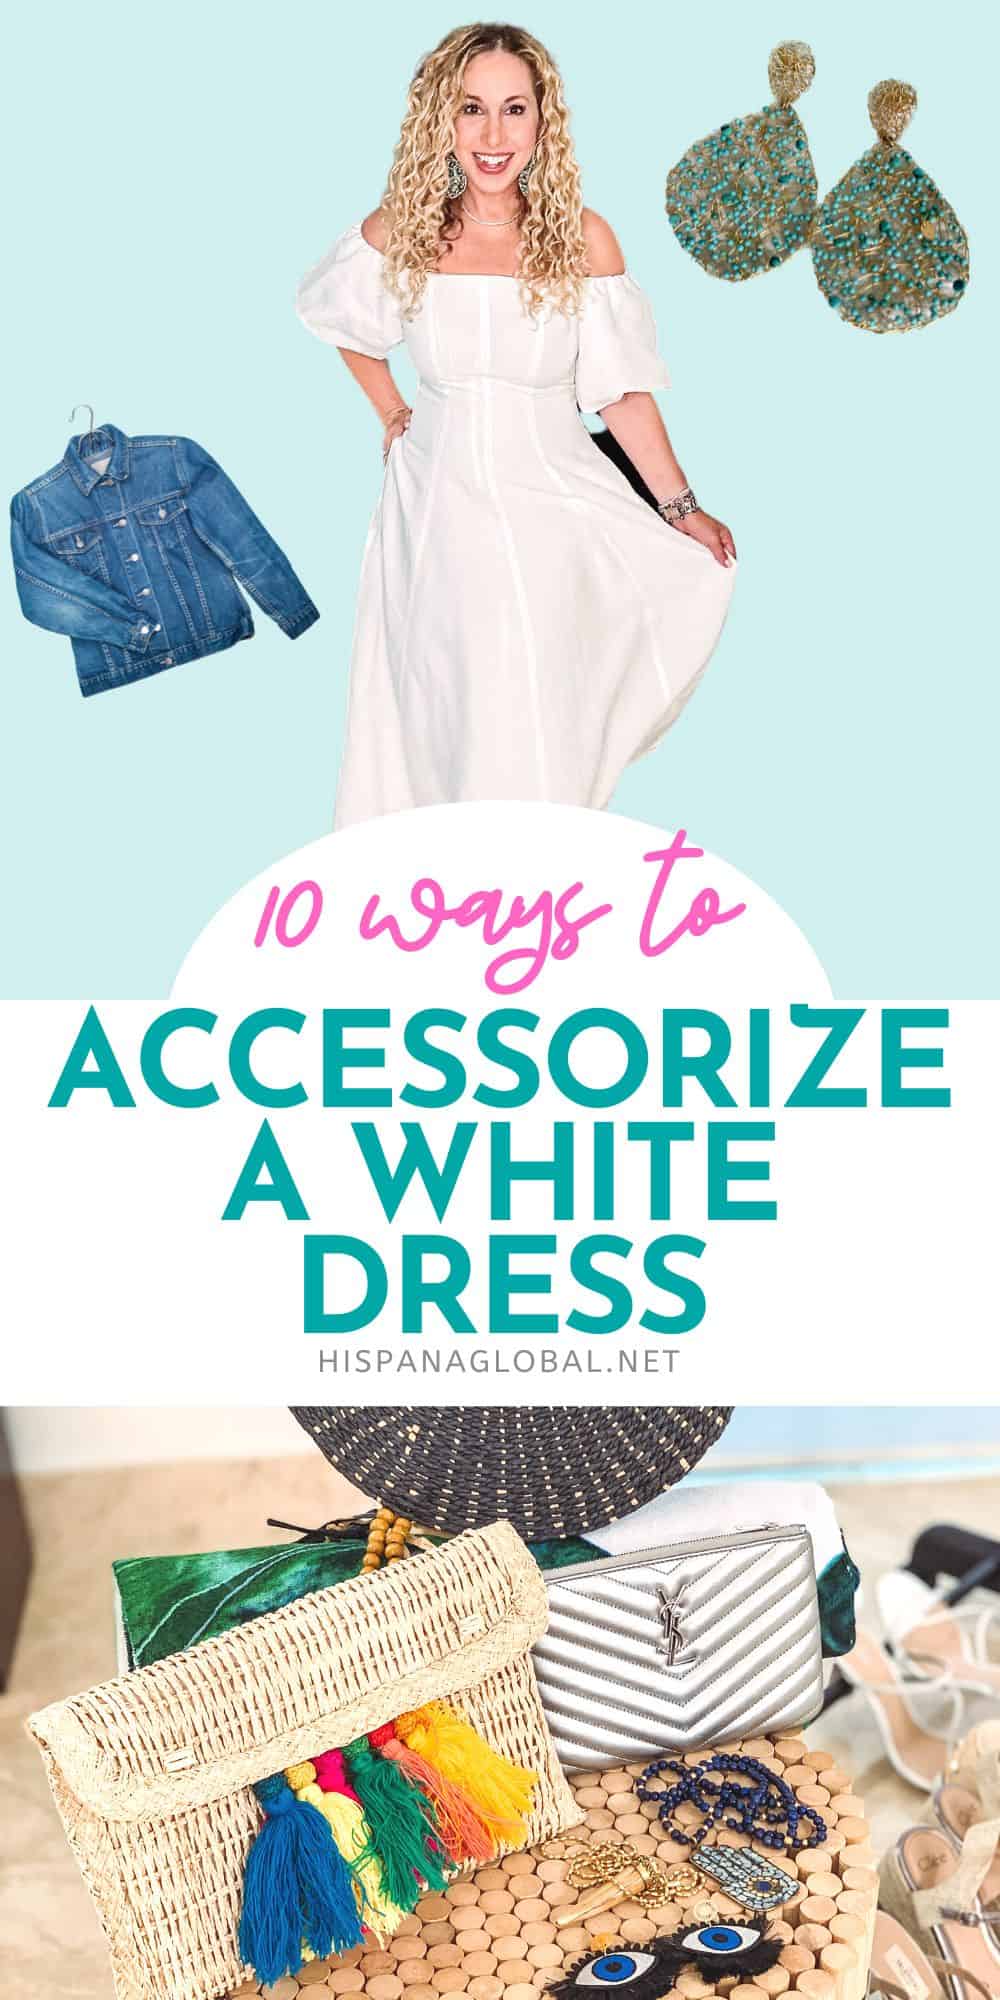 https://hispanaglobal.net/wp-content/uploads/2023/05/10-ways-to-accesorize-a-white-dress.jpg